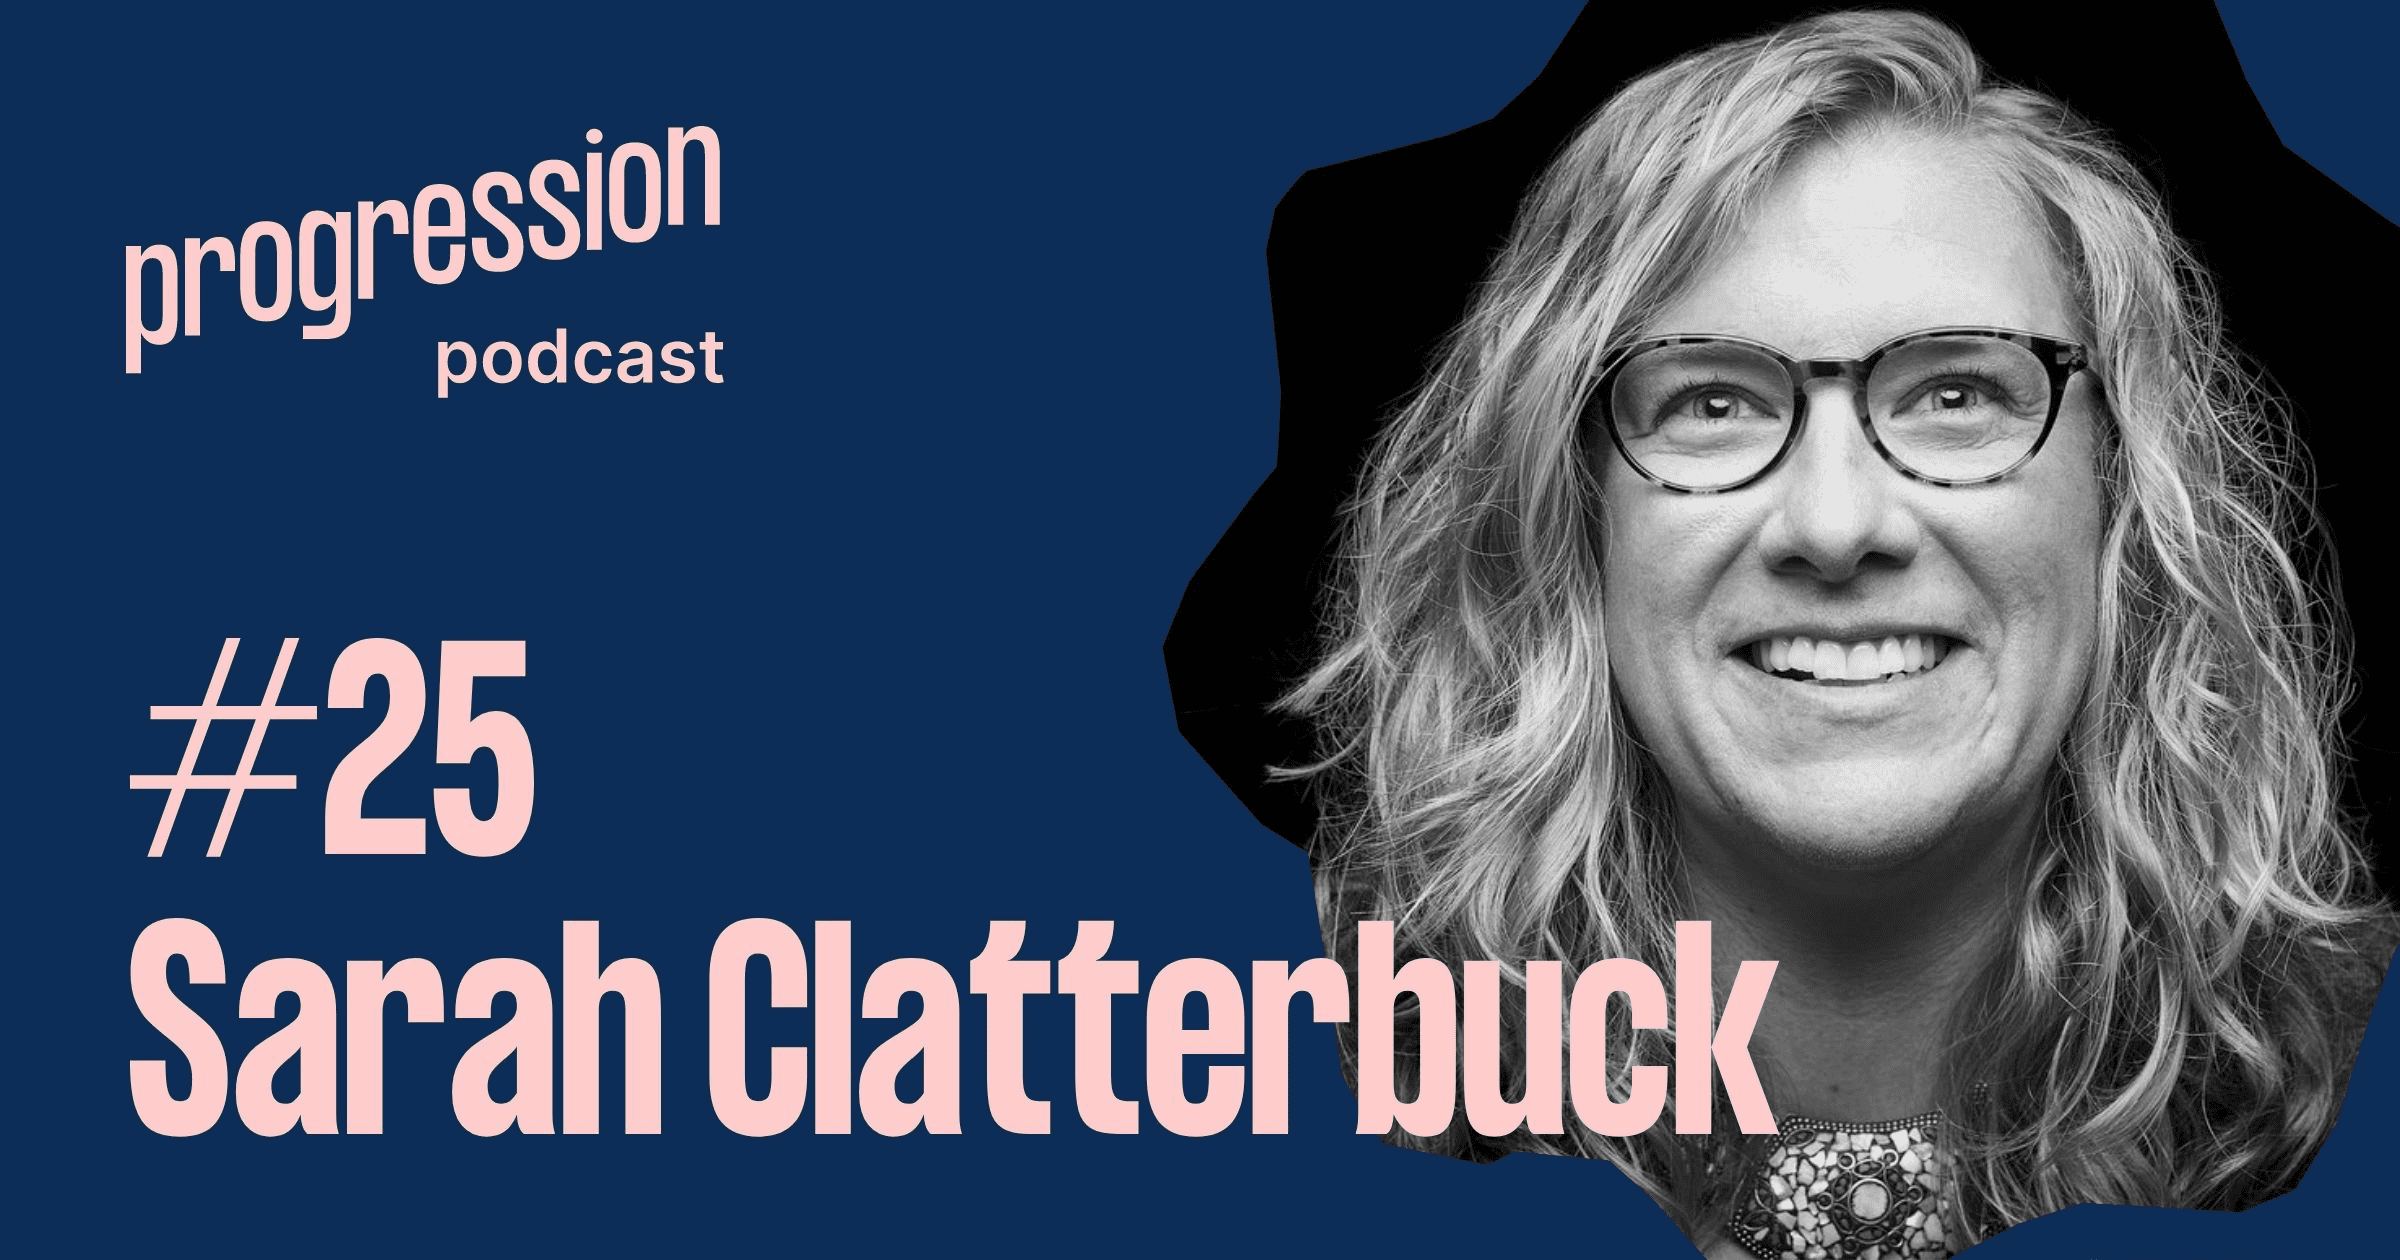 Podcast #25 Sarah Clatterbuck (Yahoo, LinkedIn, Google) on frameworks for startups vs large orgs and avoiding anti-patterns